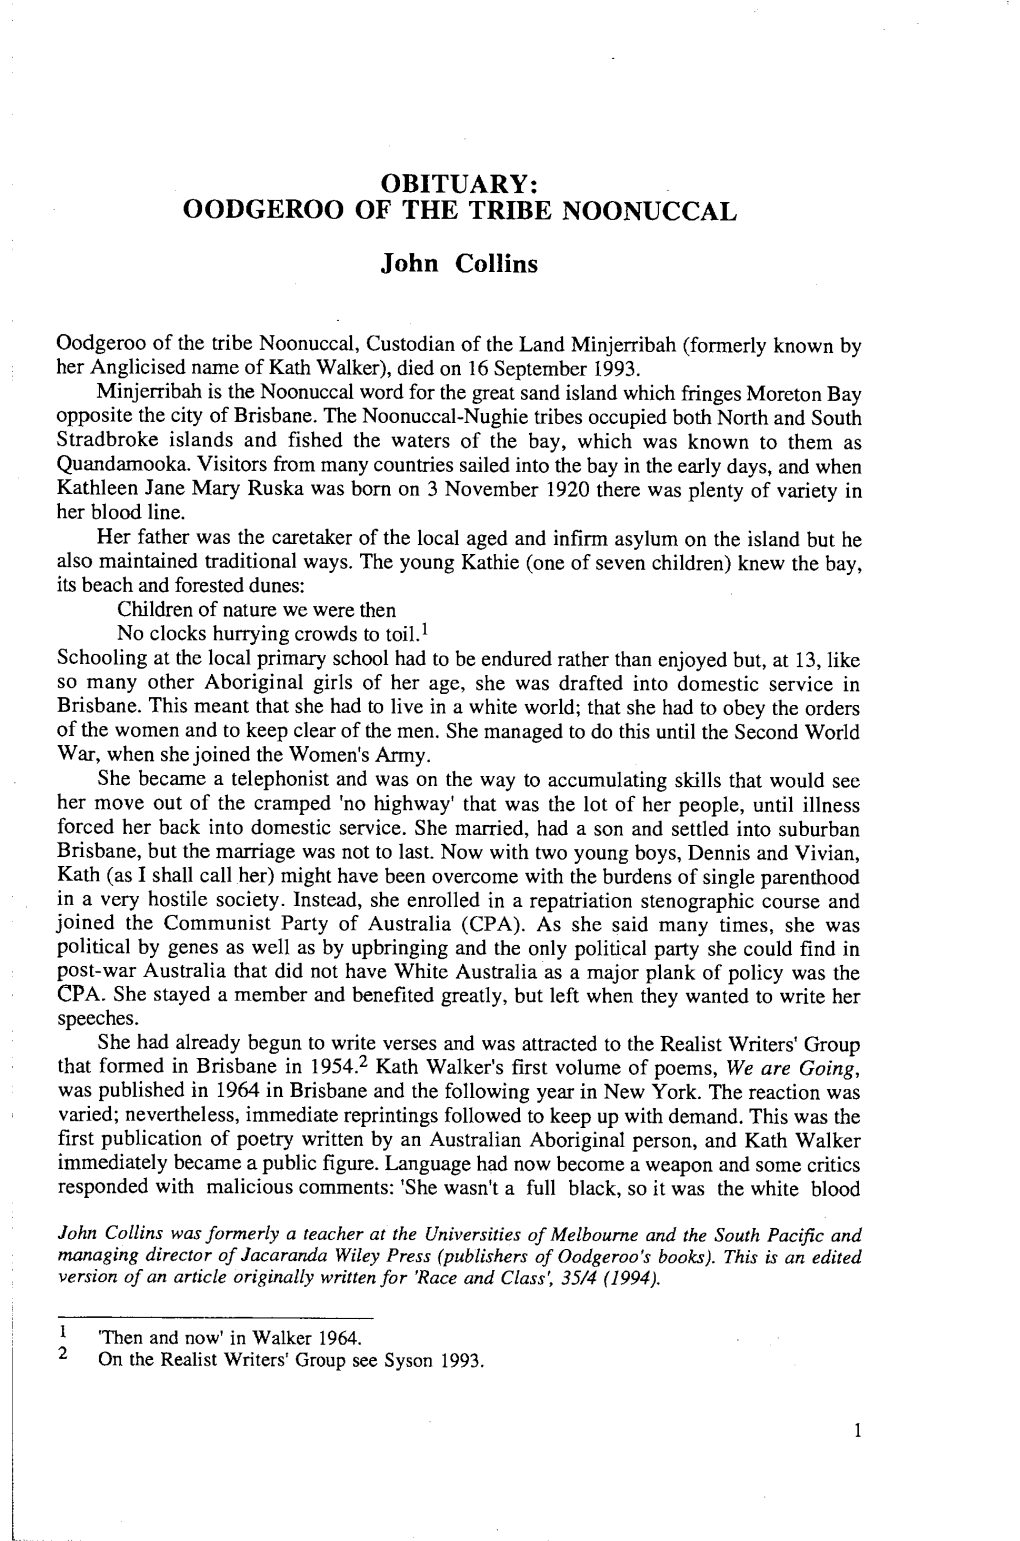 OBITUARY: OODGEROO of the TRIBE NOONUCCAL John Collins